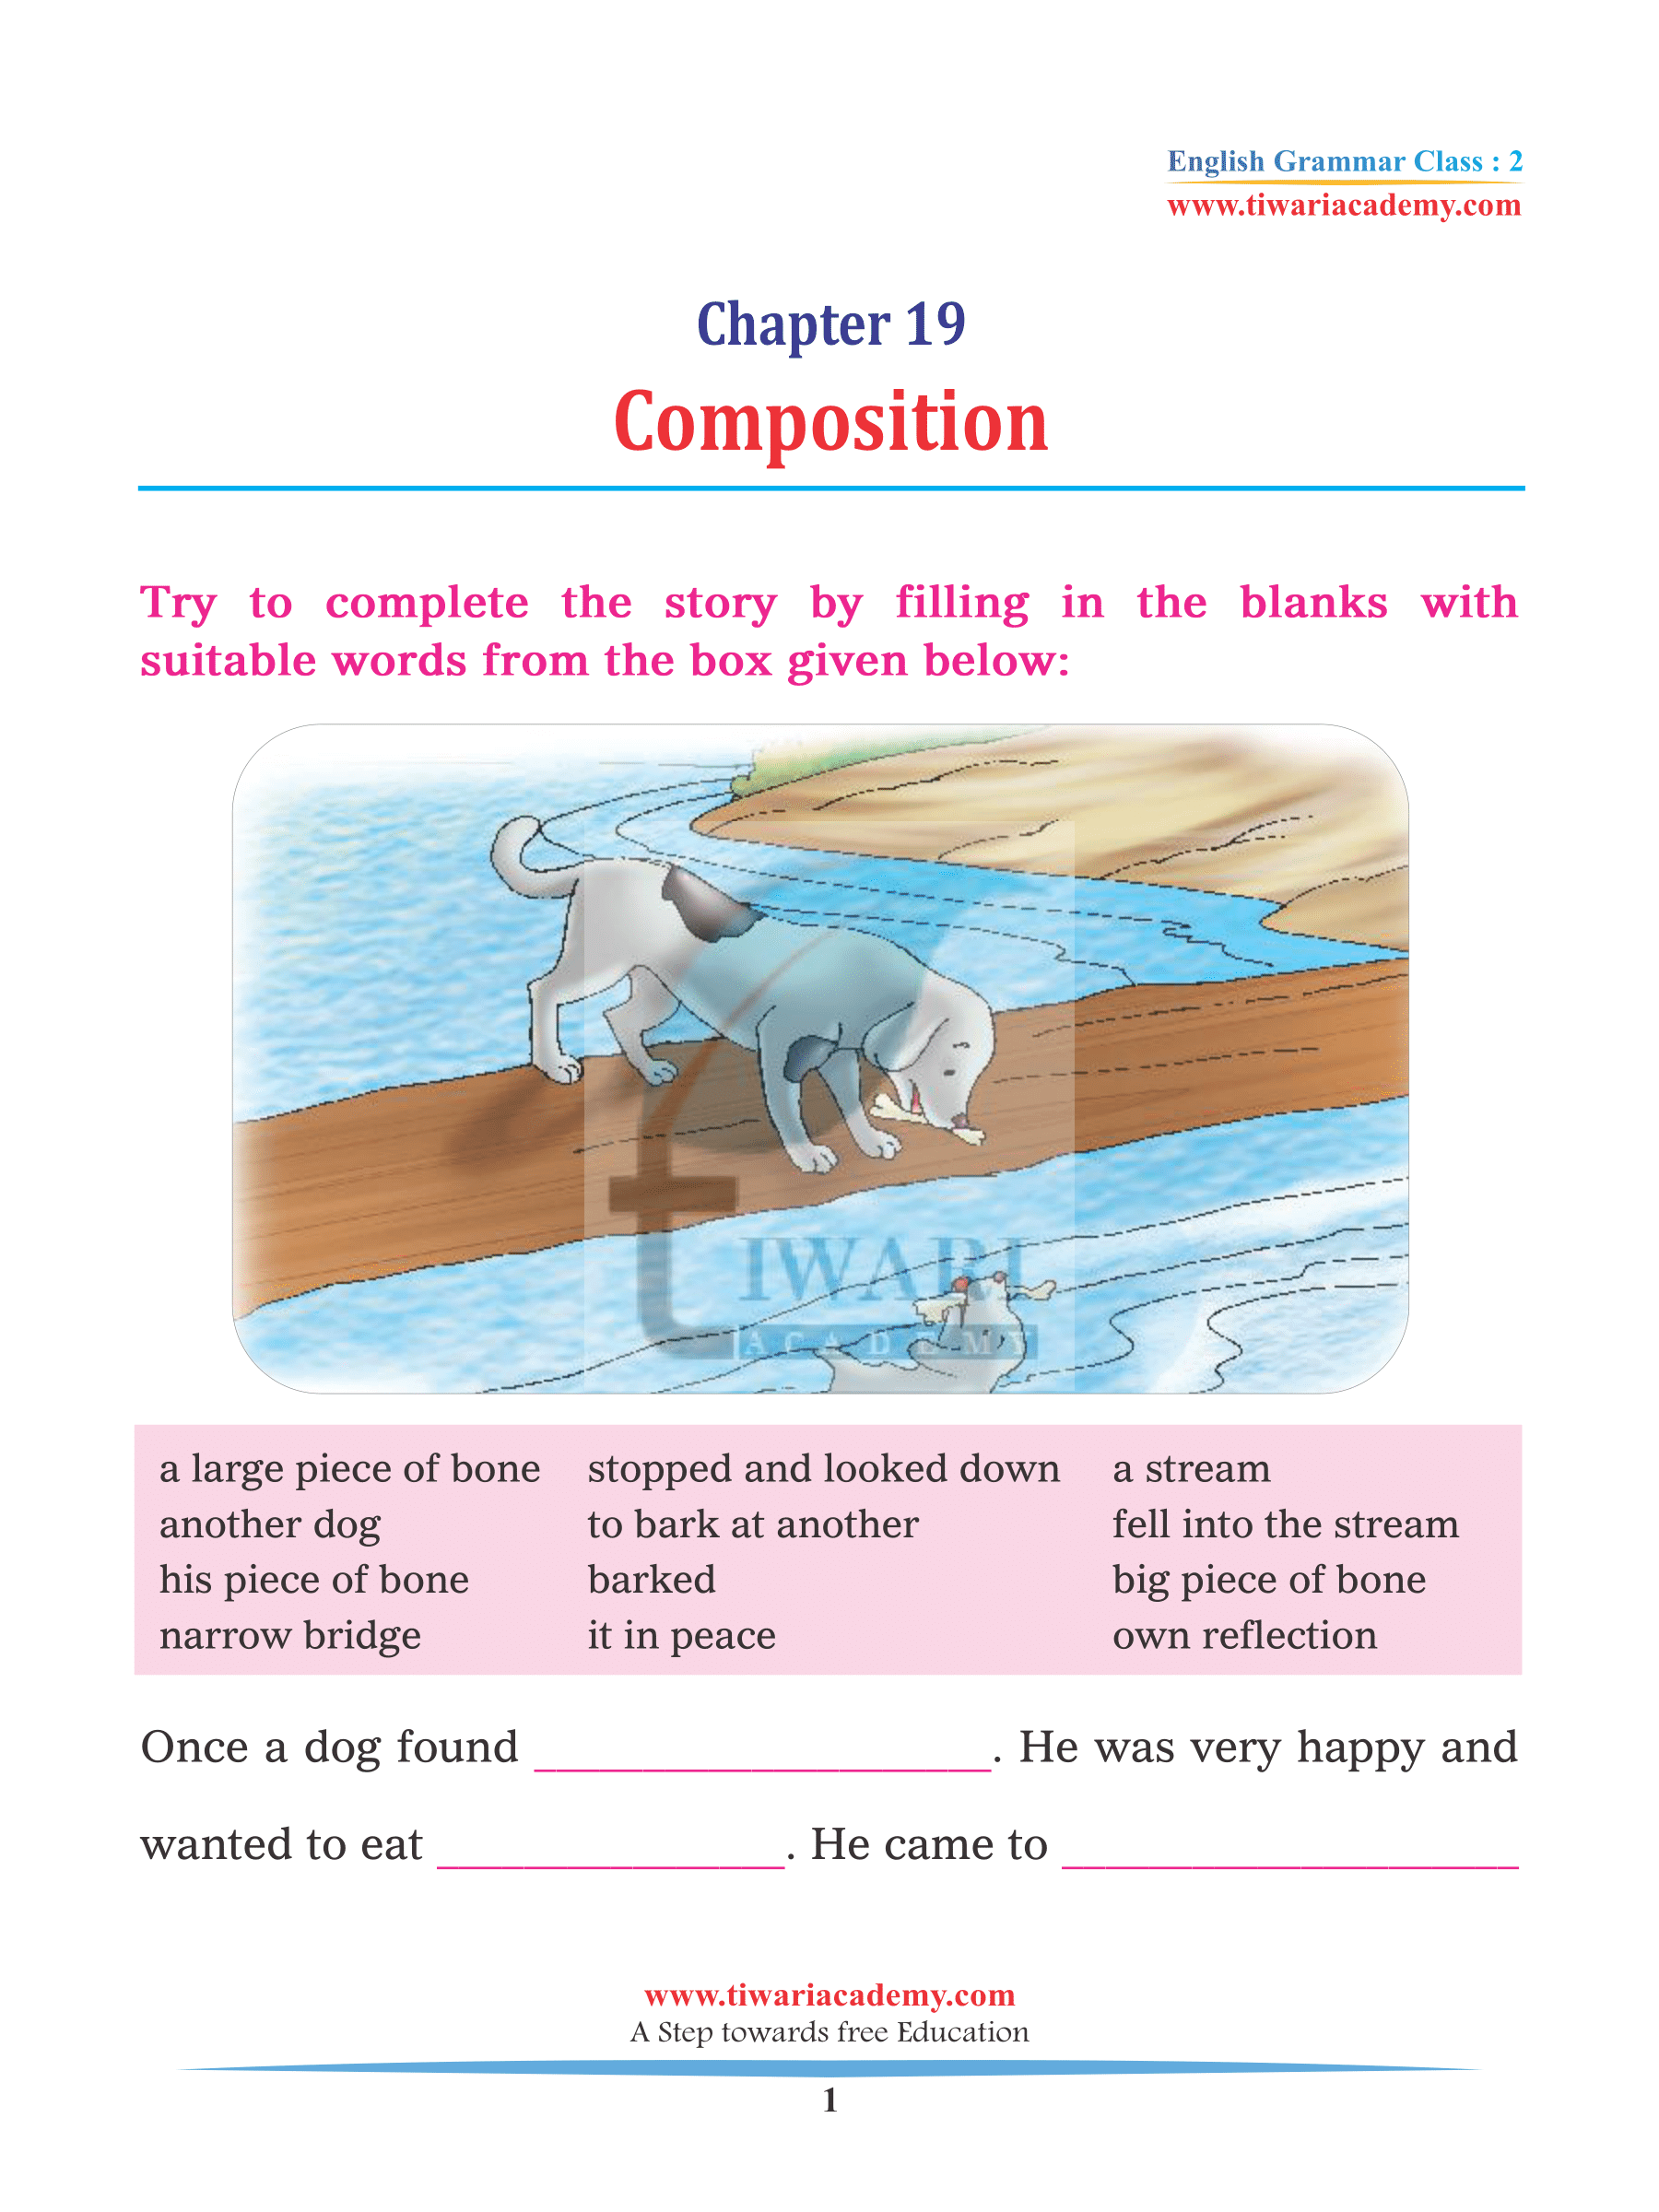 Class 2 English Grammar Chapter 19 Composition Assignments